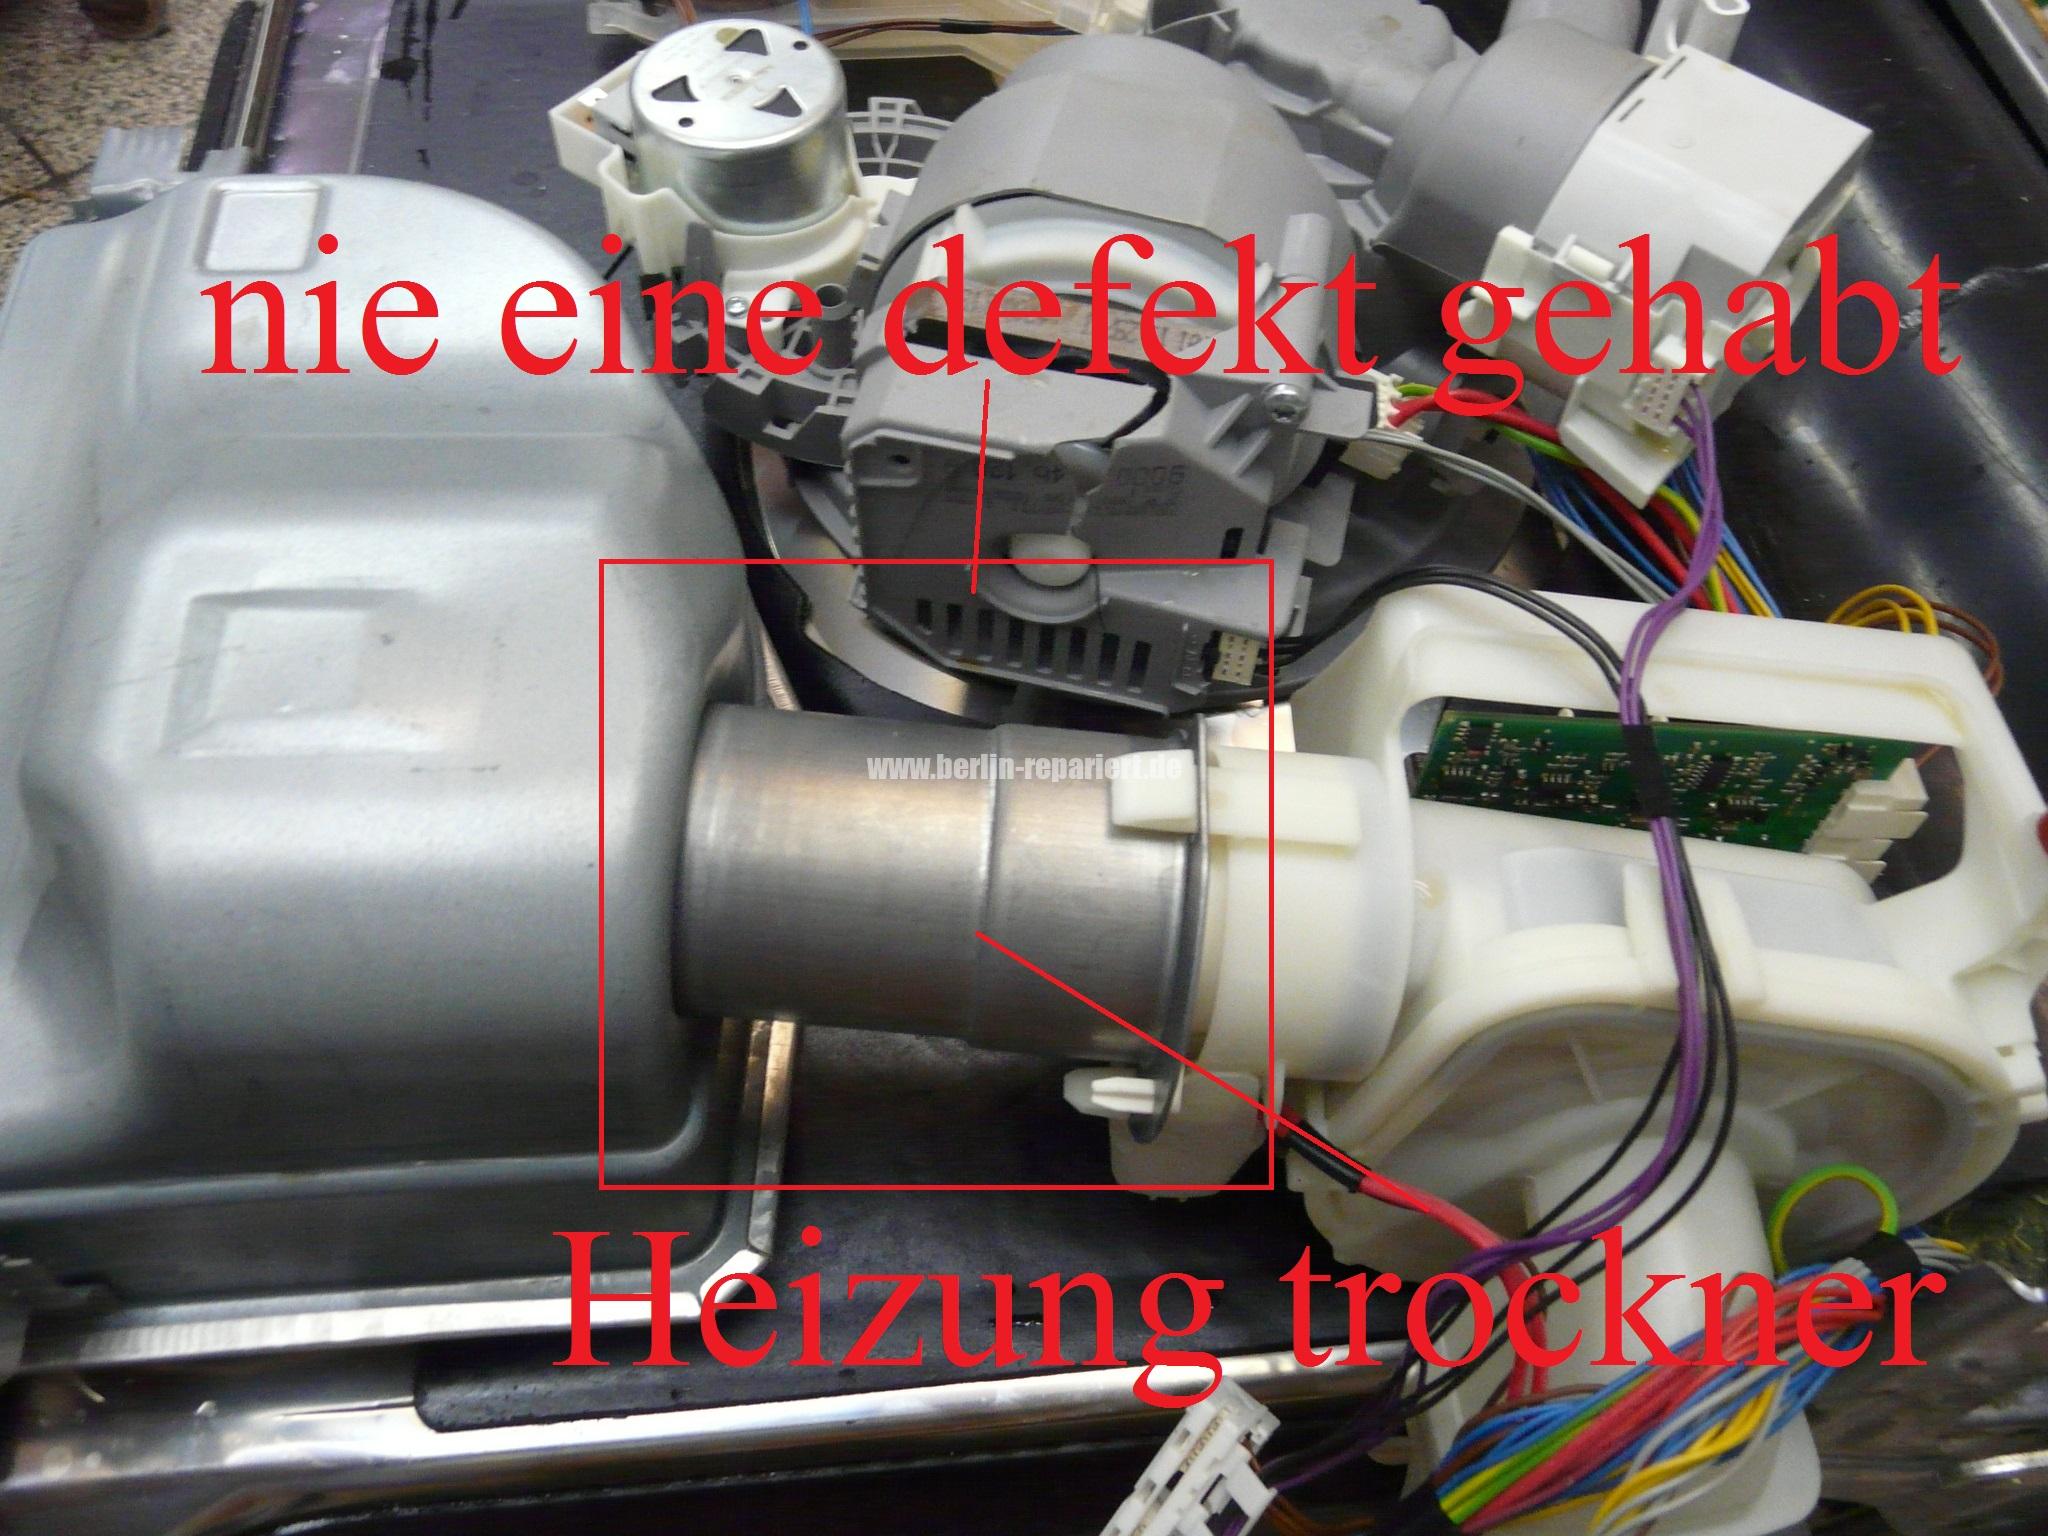 Bosch Ölbehälter für Düsenprüfgerät EFEP 60H inkl. Filterelement